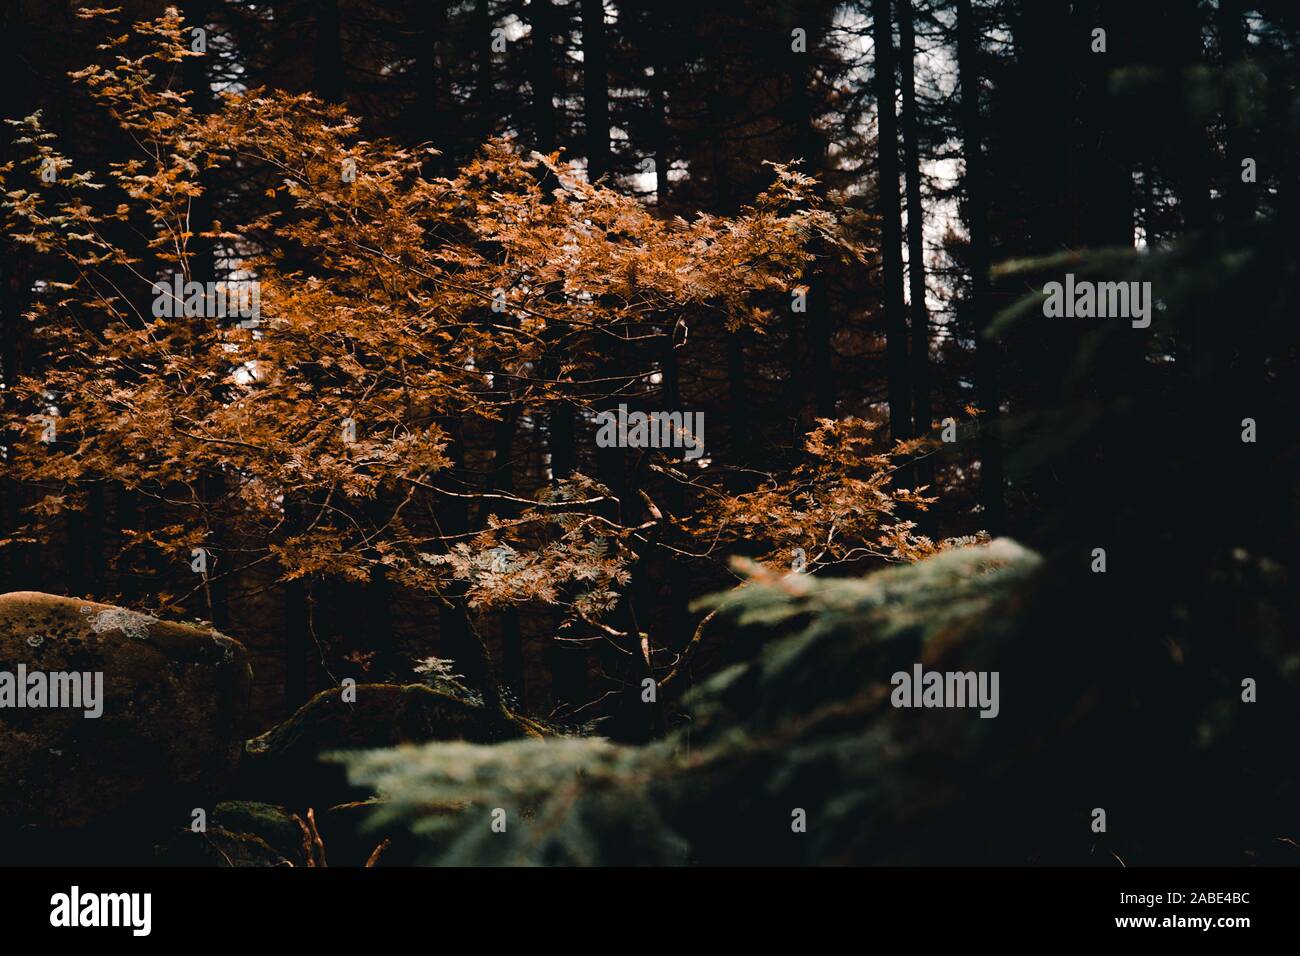 Luminous foliage in the dark forest Stock Photo